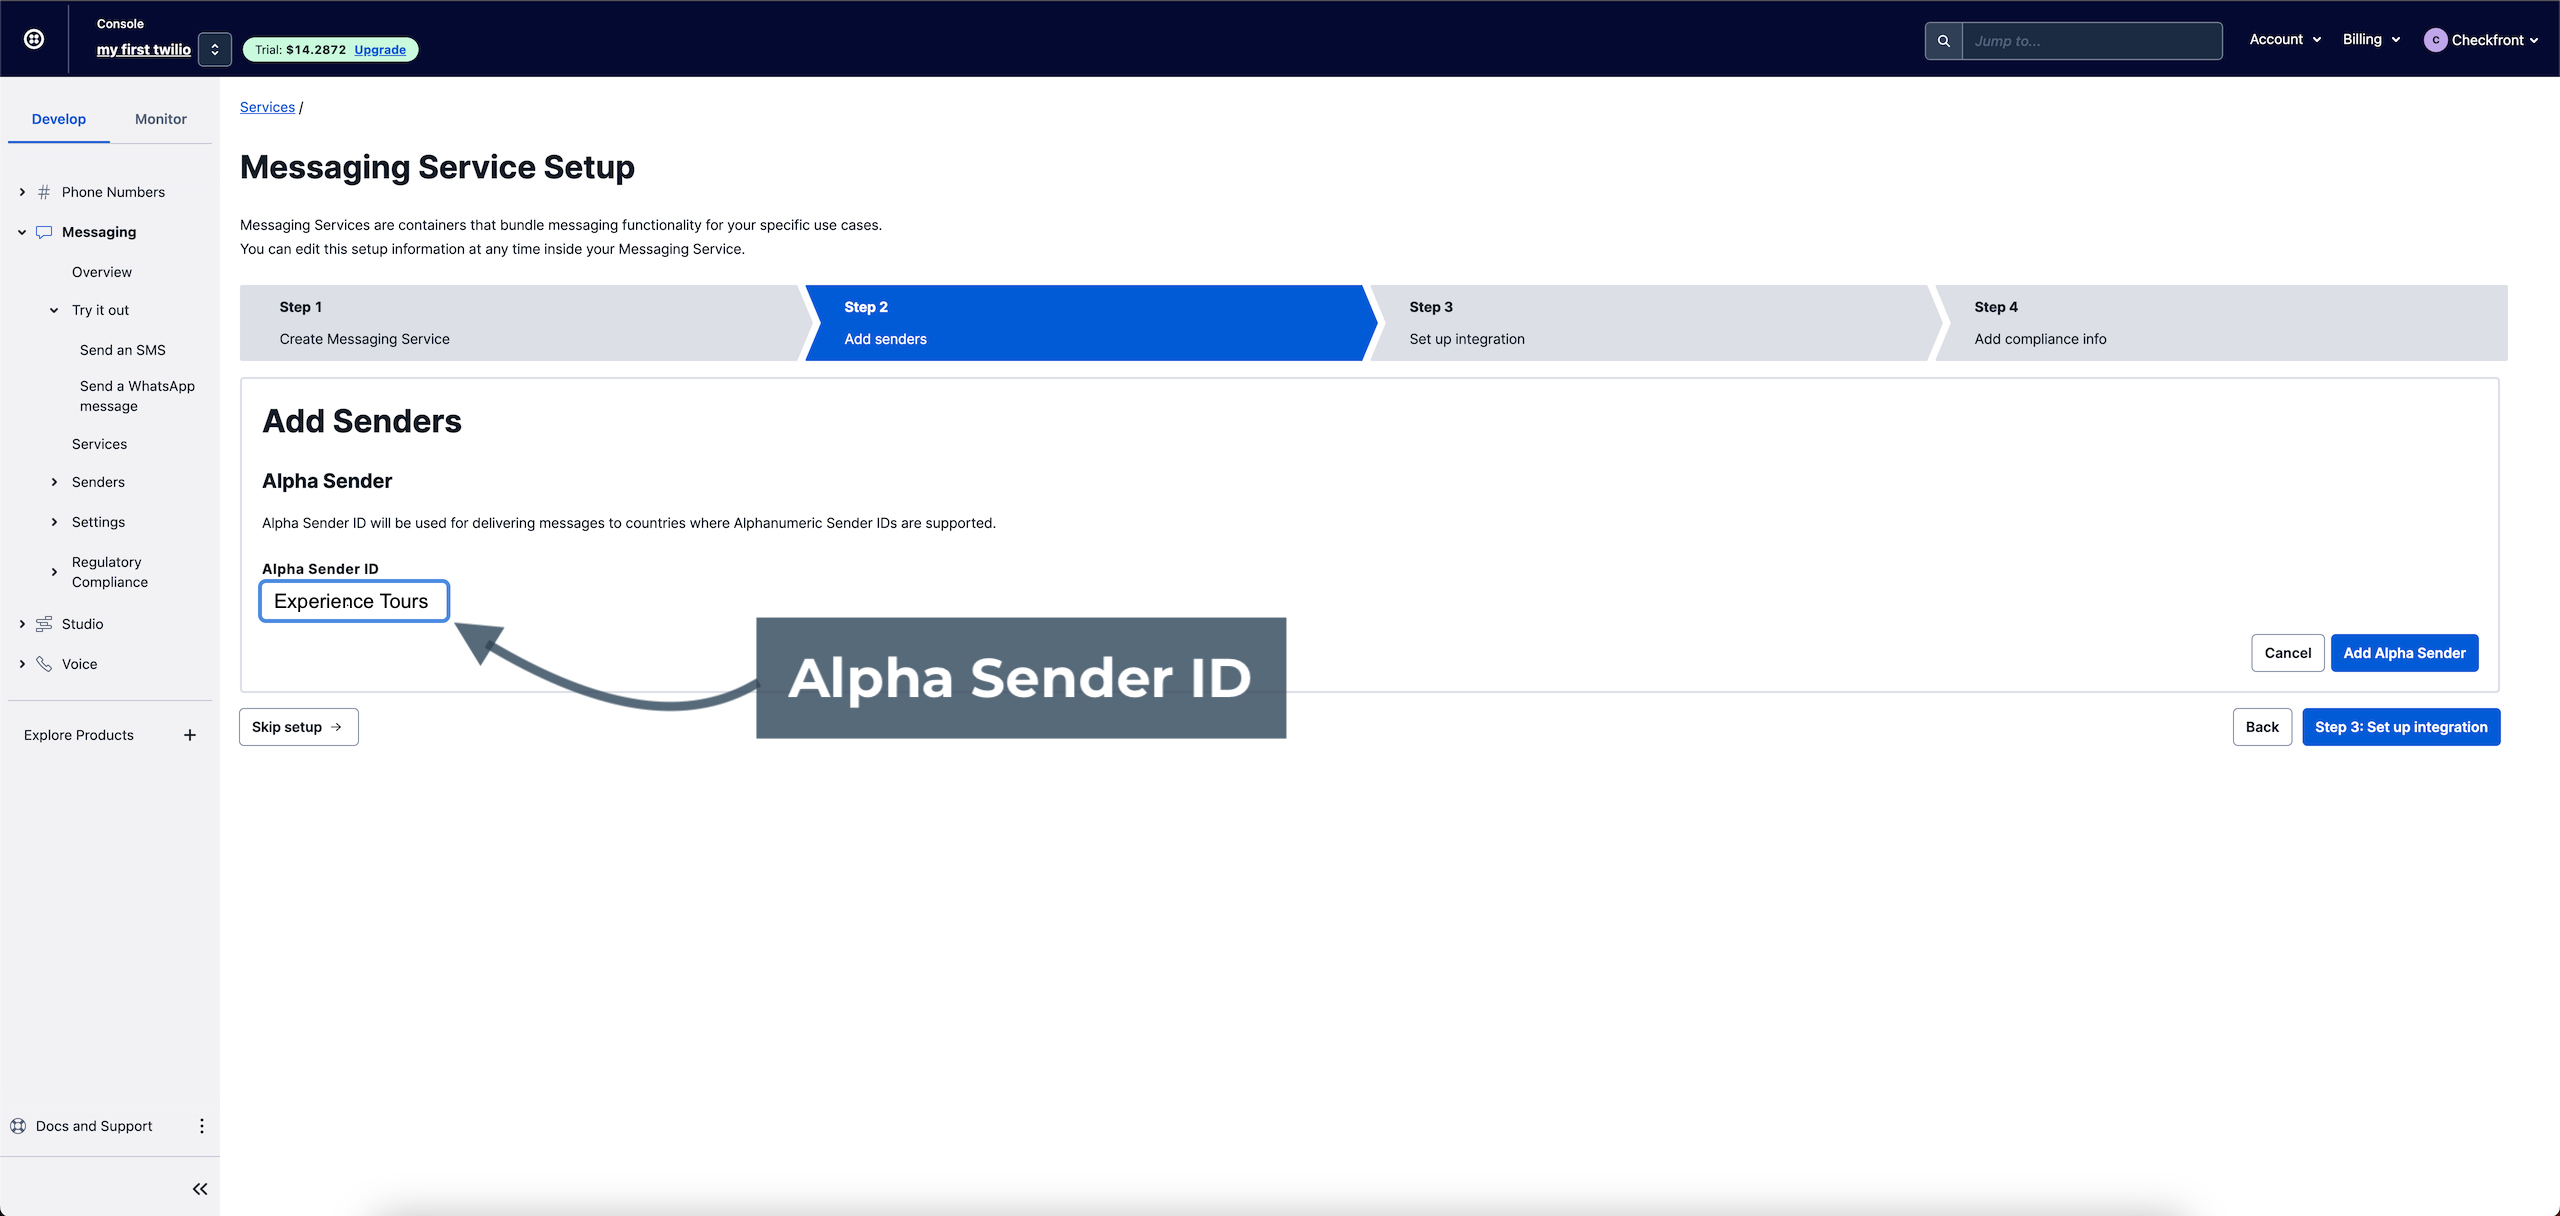 Alpha Sender ID